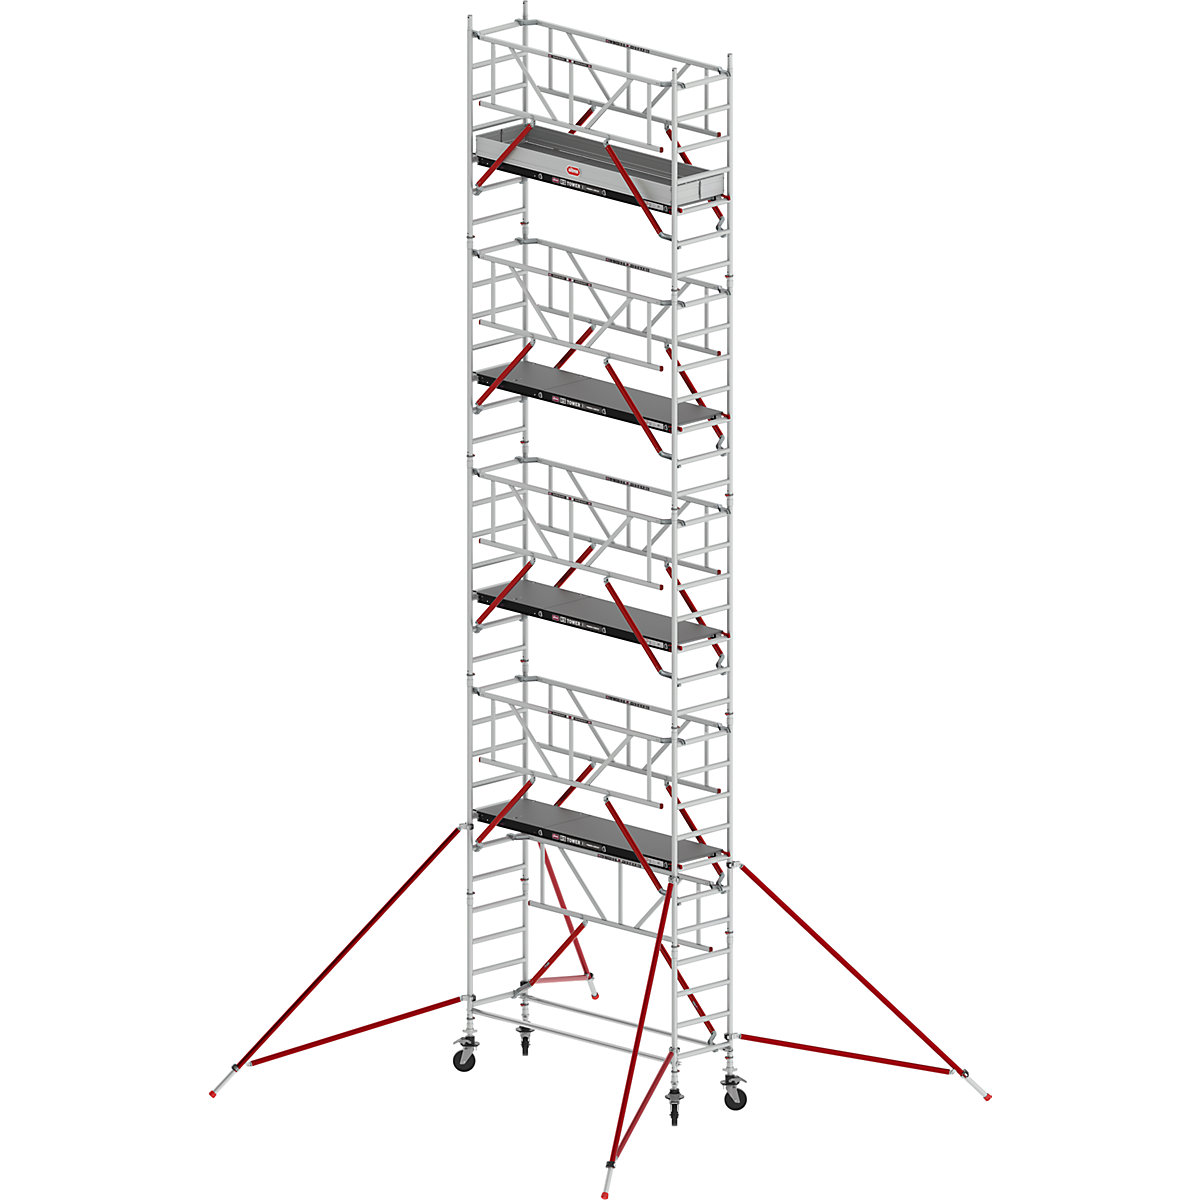 Uska pomična skela RS TOWER 51 – Altrex, s platformom Fiber-Deck®, dužina 2,45 m, radna visina 10,20 m-3